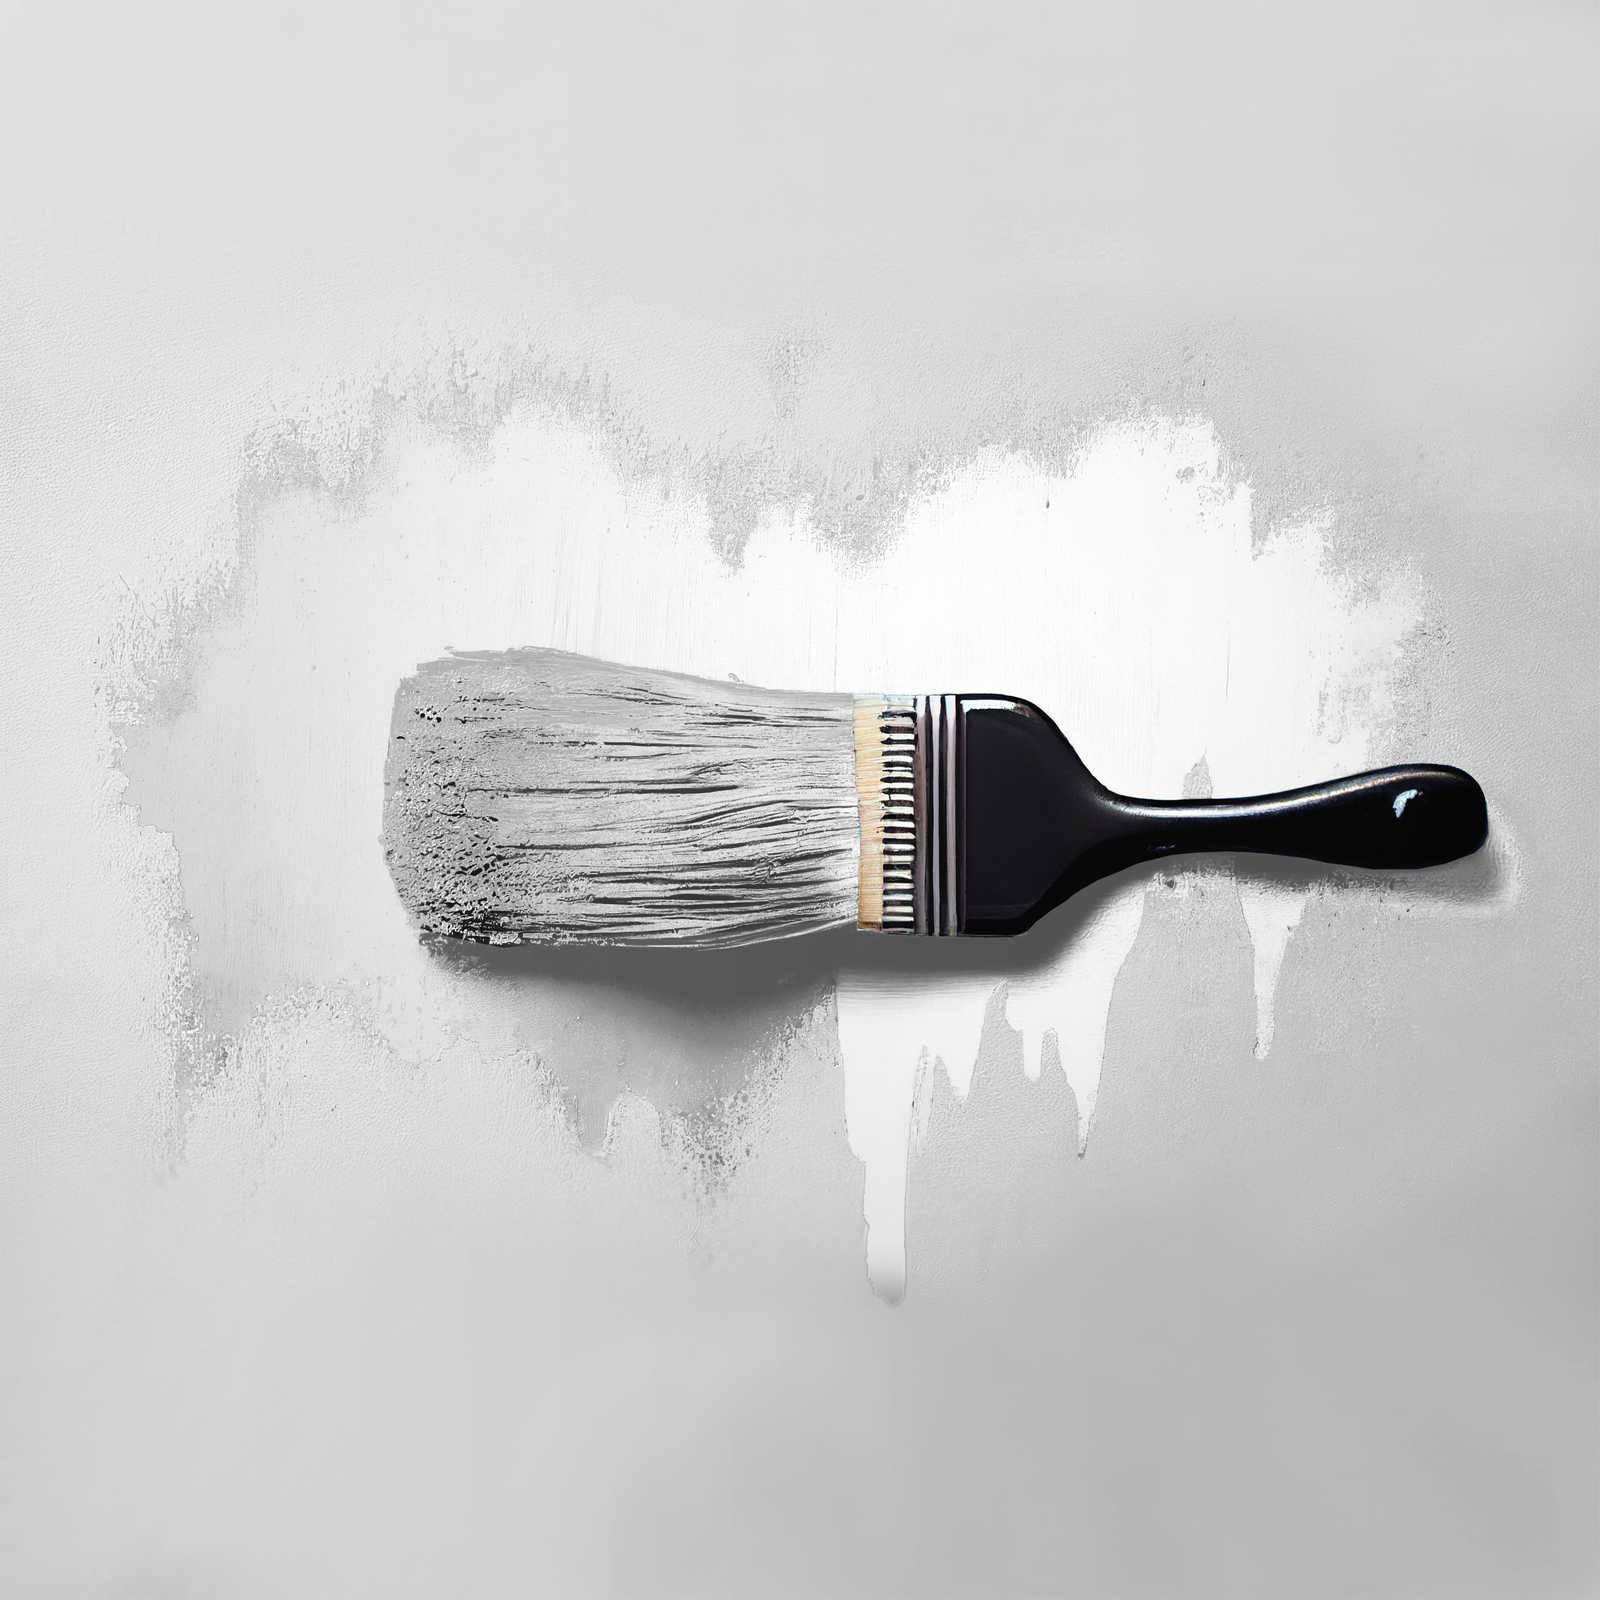             Wall Paint TCK1000 »Melting Marshmellow« in neutral white – 2.5 litre
        